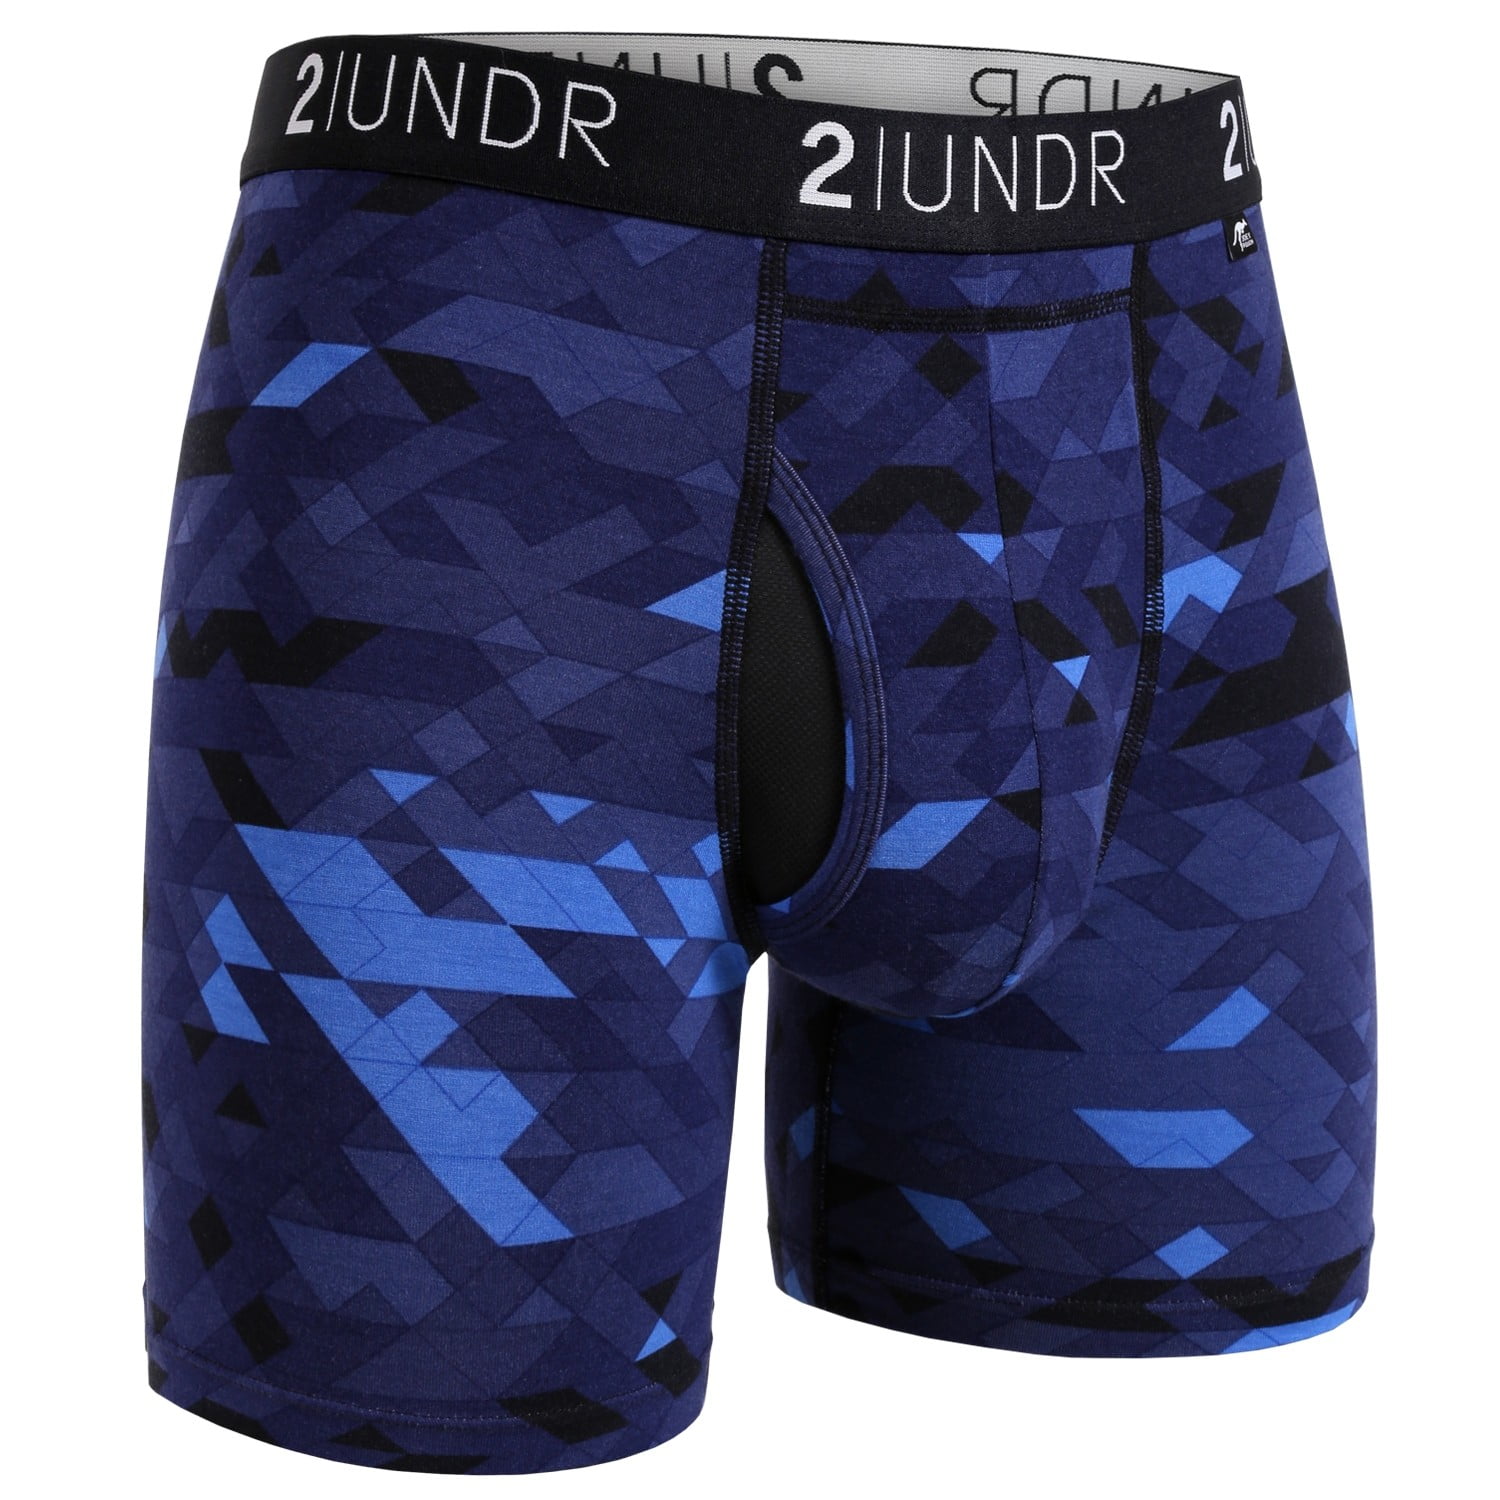 2UNDR Men's Swing Shift Limtied Edition Boxers (Geode, X-Large) 